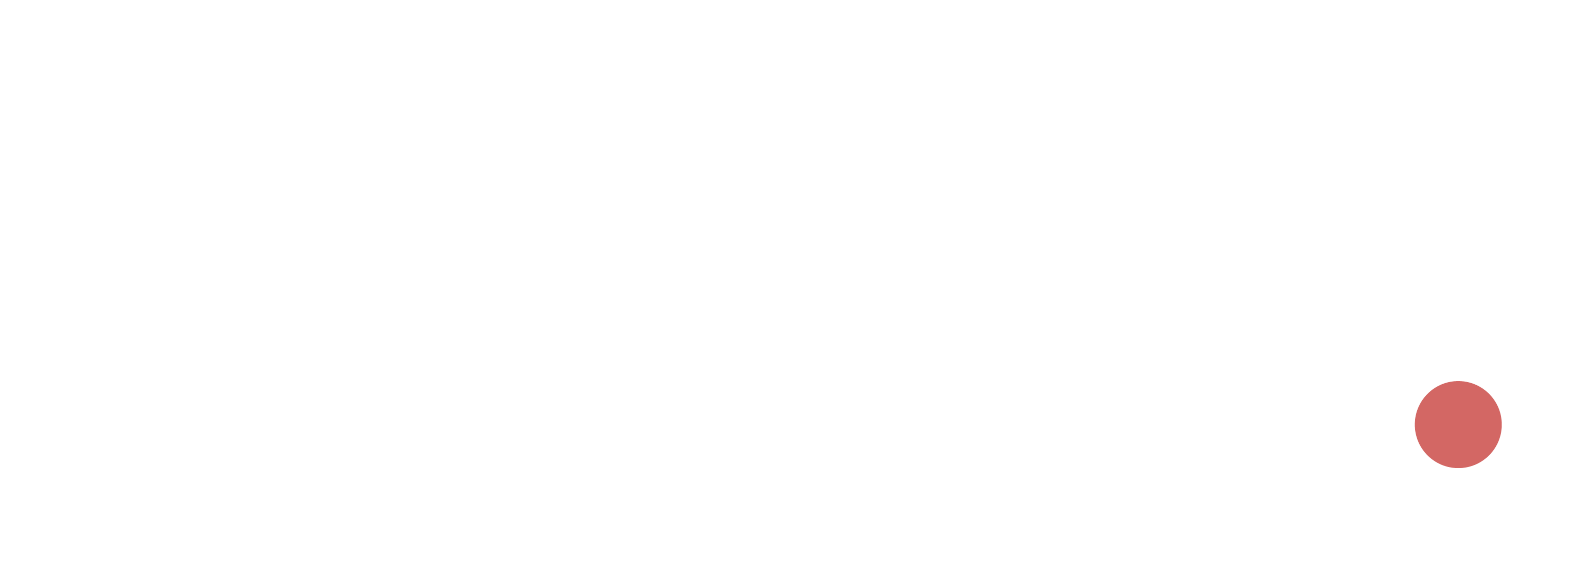 Pixifi Logo | Business Management Software For Creative Professionals